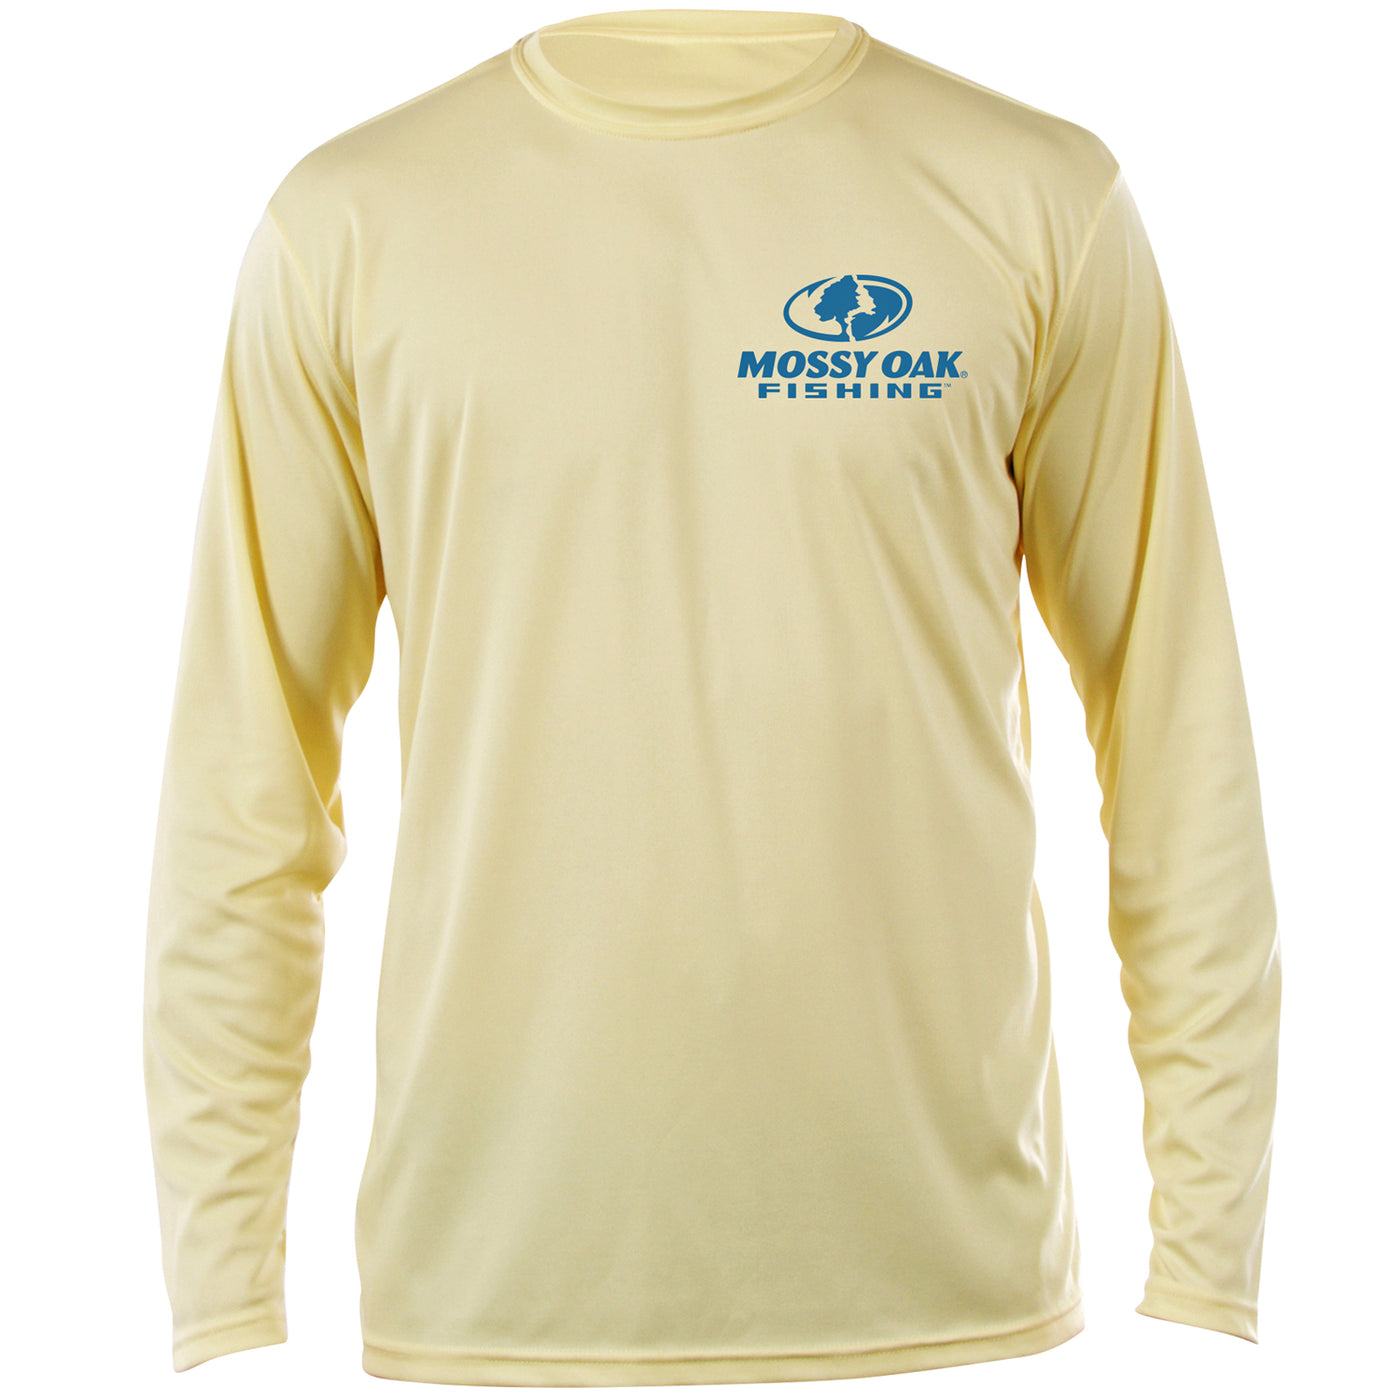 Mossy Oak Fishing Graphic Long Sleeve Shirt Pale Yellow Front